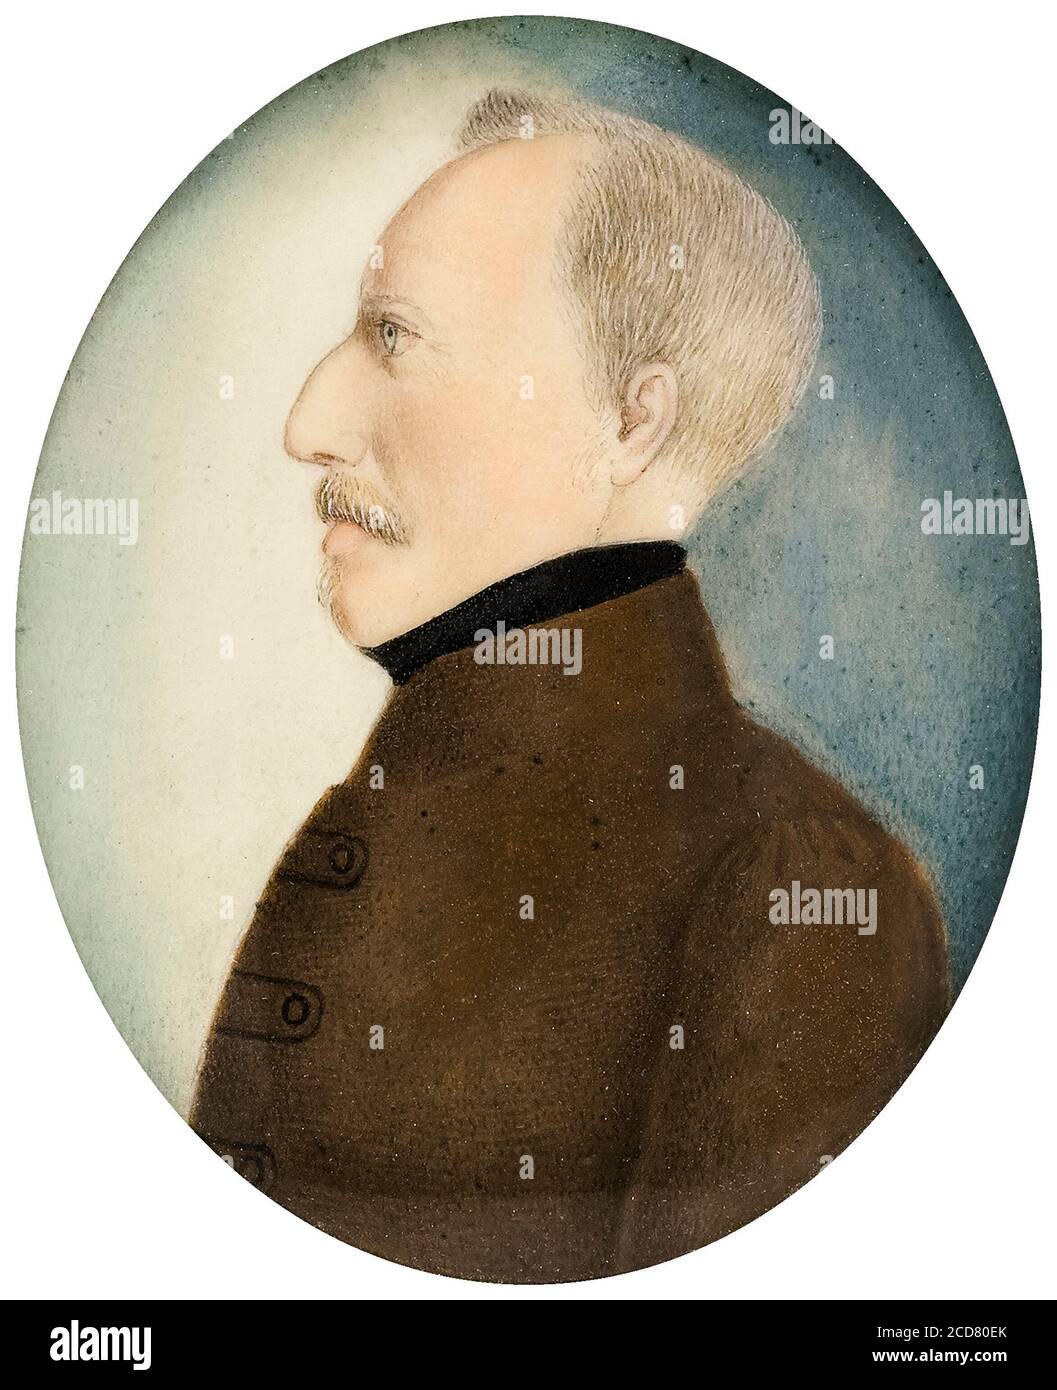 Colonel Gustafsson, the former Gustav IV Adolf (1778-1837), King of Sweden, portrait miniature circa 1830 Stock Photo